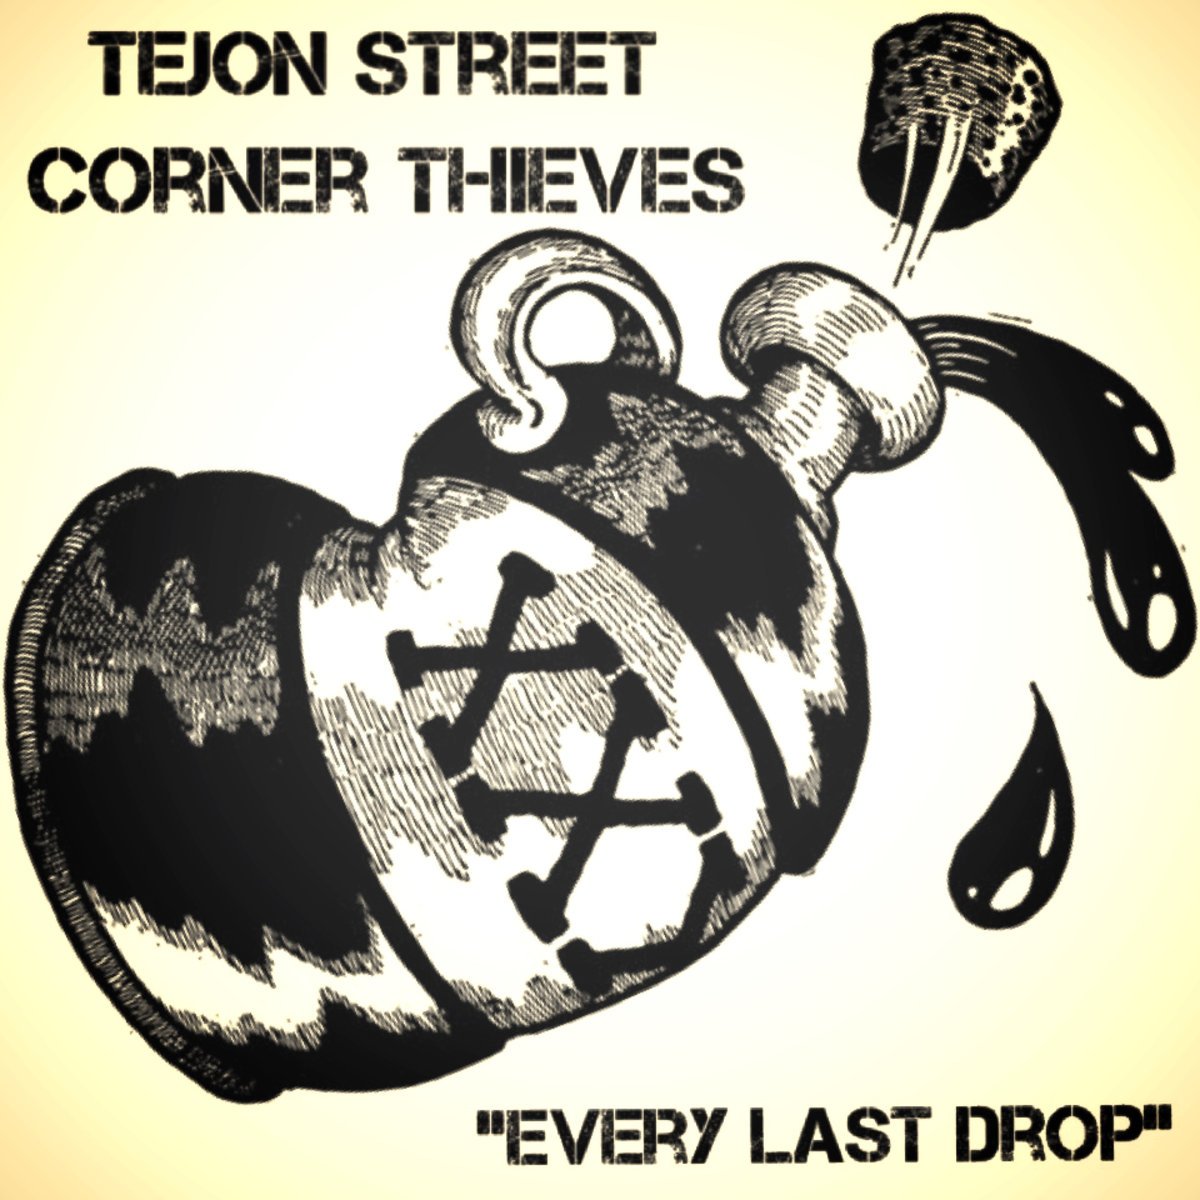 Street corner thieves. Tejon Street Corner Thieves. Tejon Street Corner Thieves Whiskey. Tejon Street Corner Thieves группа. Whiskey Tejon Street Corner Thieves thick.